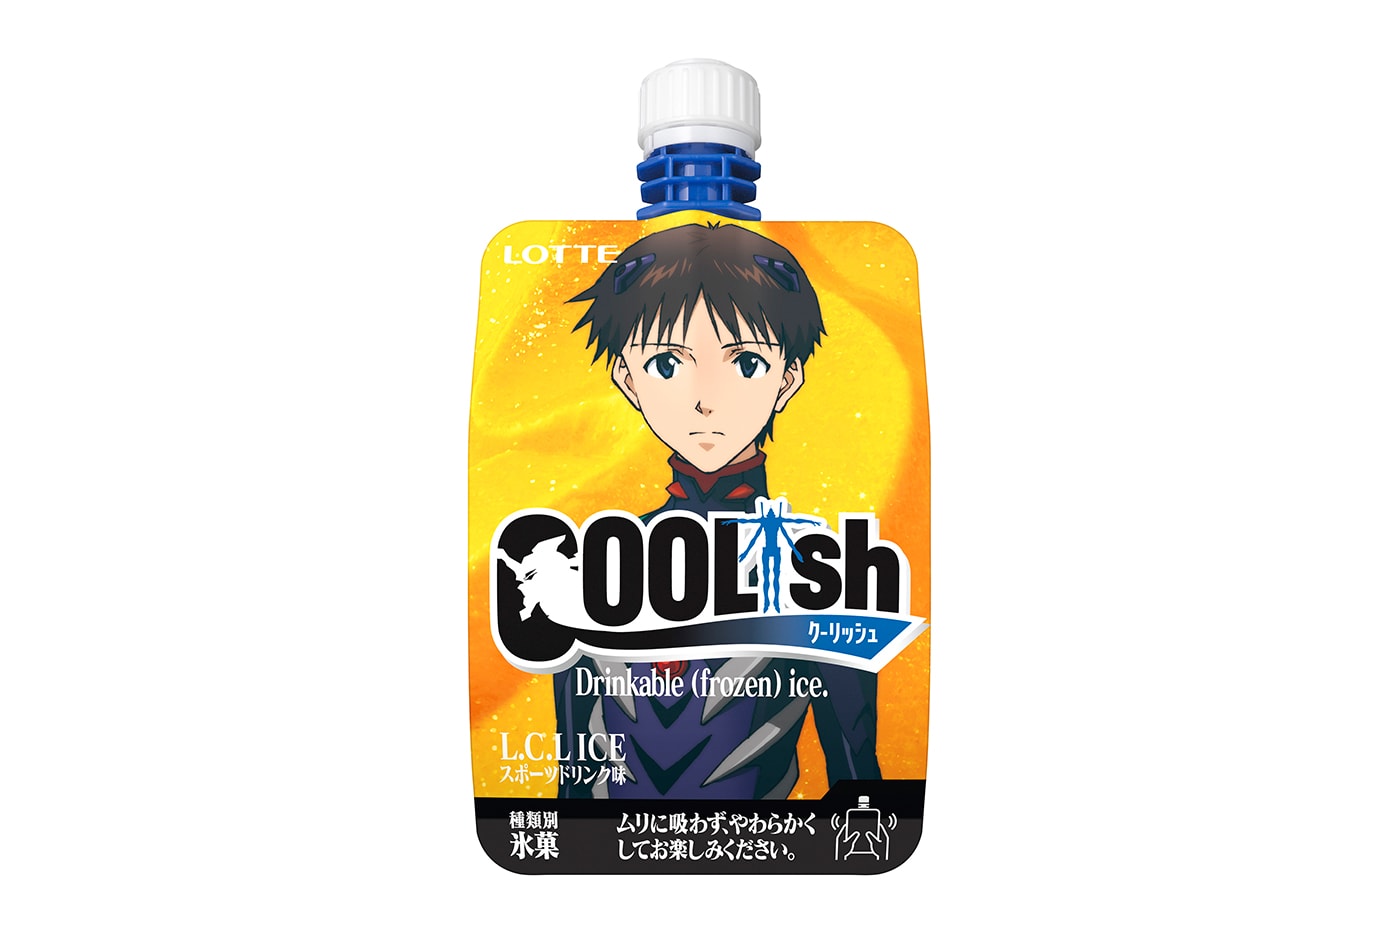 Lotte Evangelion LCL Ice Cream Slushy anime japan Shinji Rei Asuka coolish release 